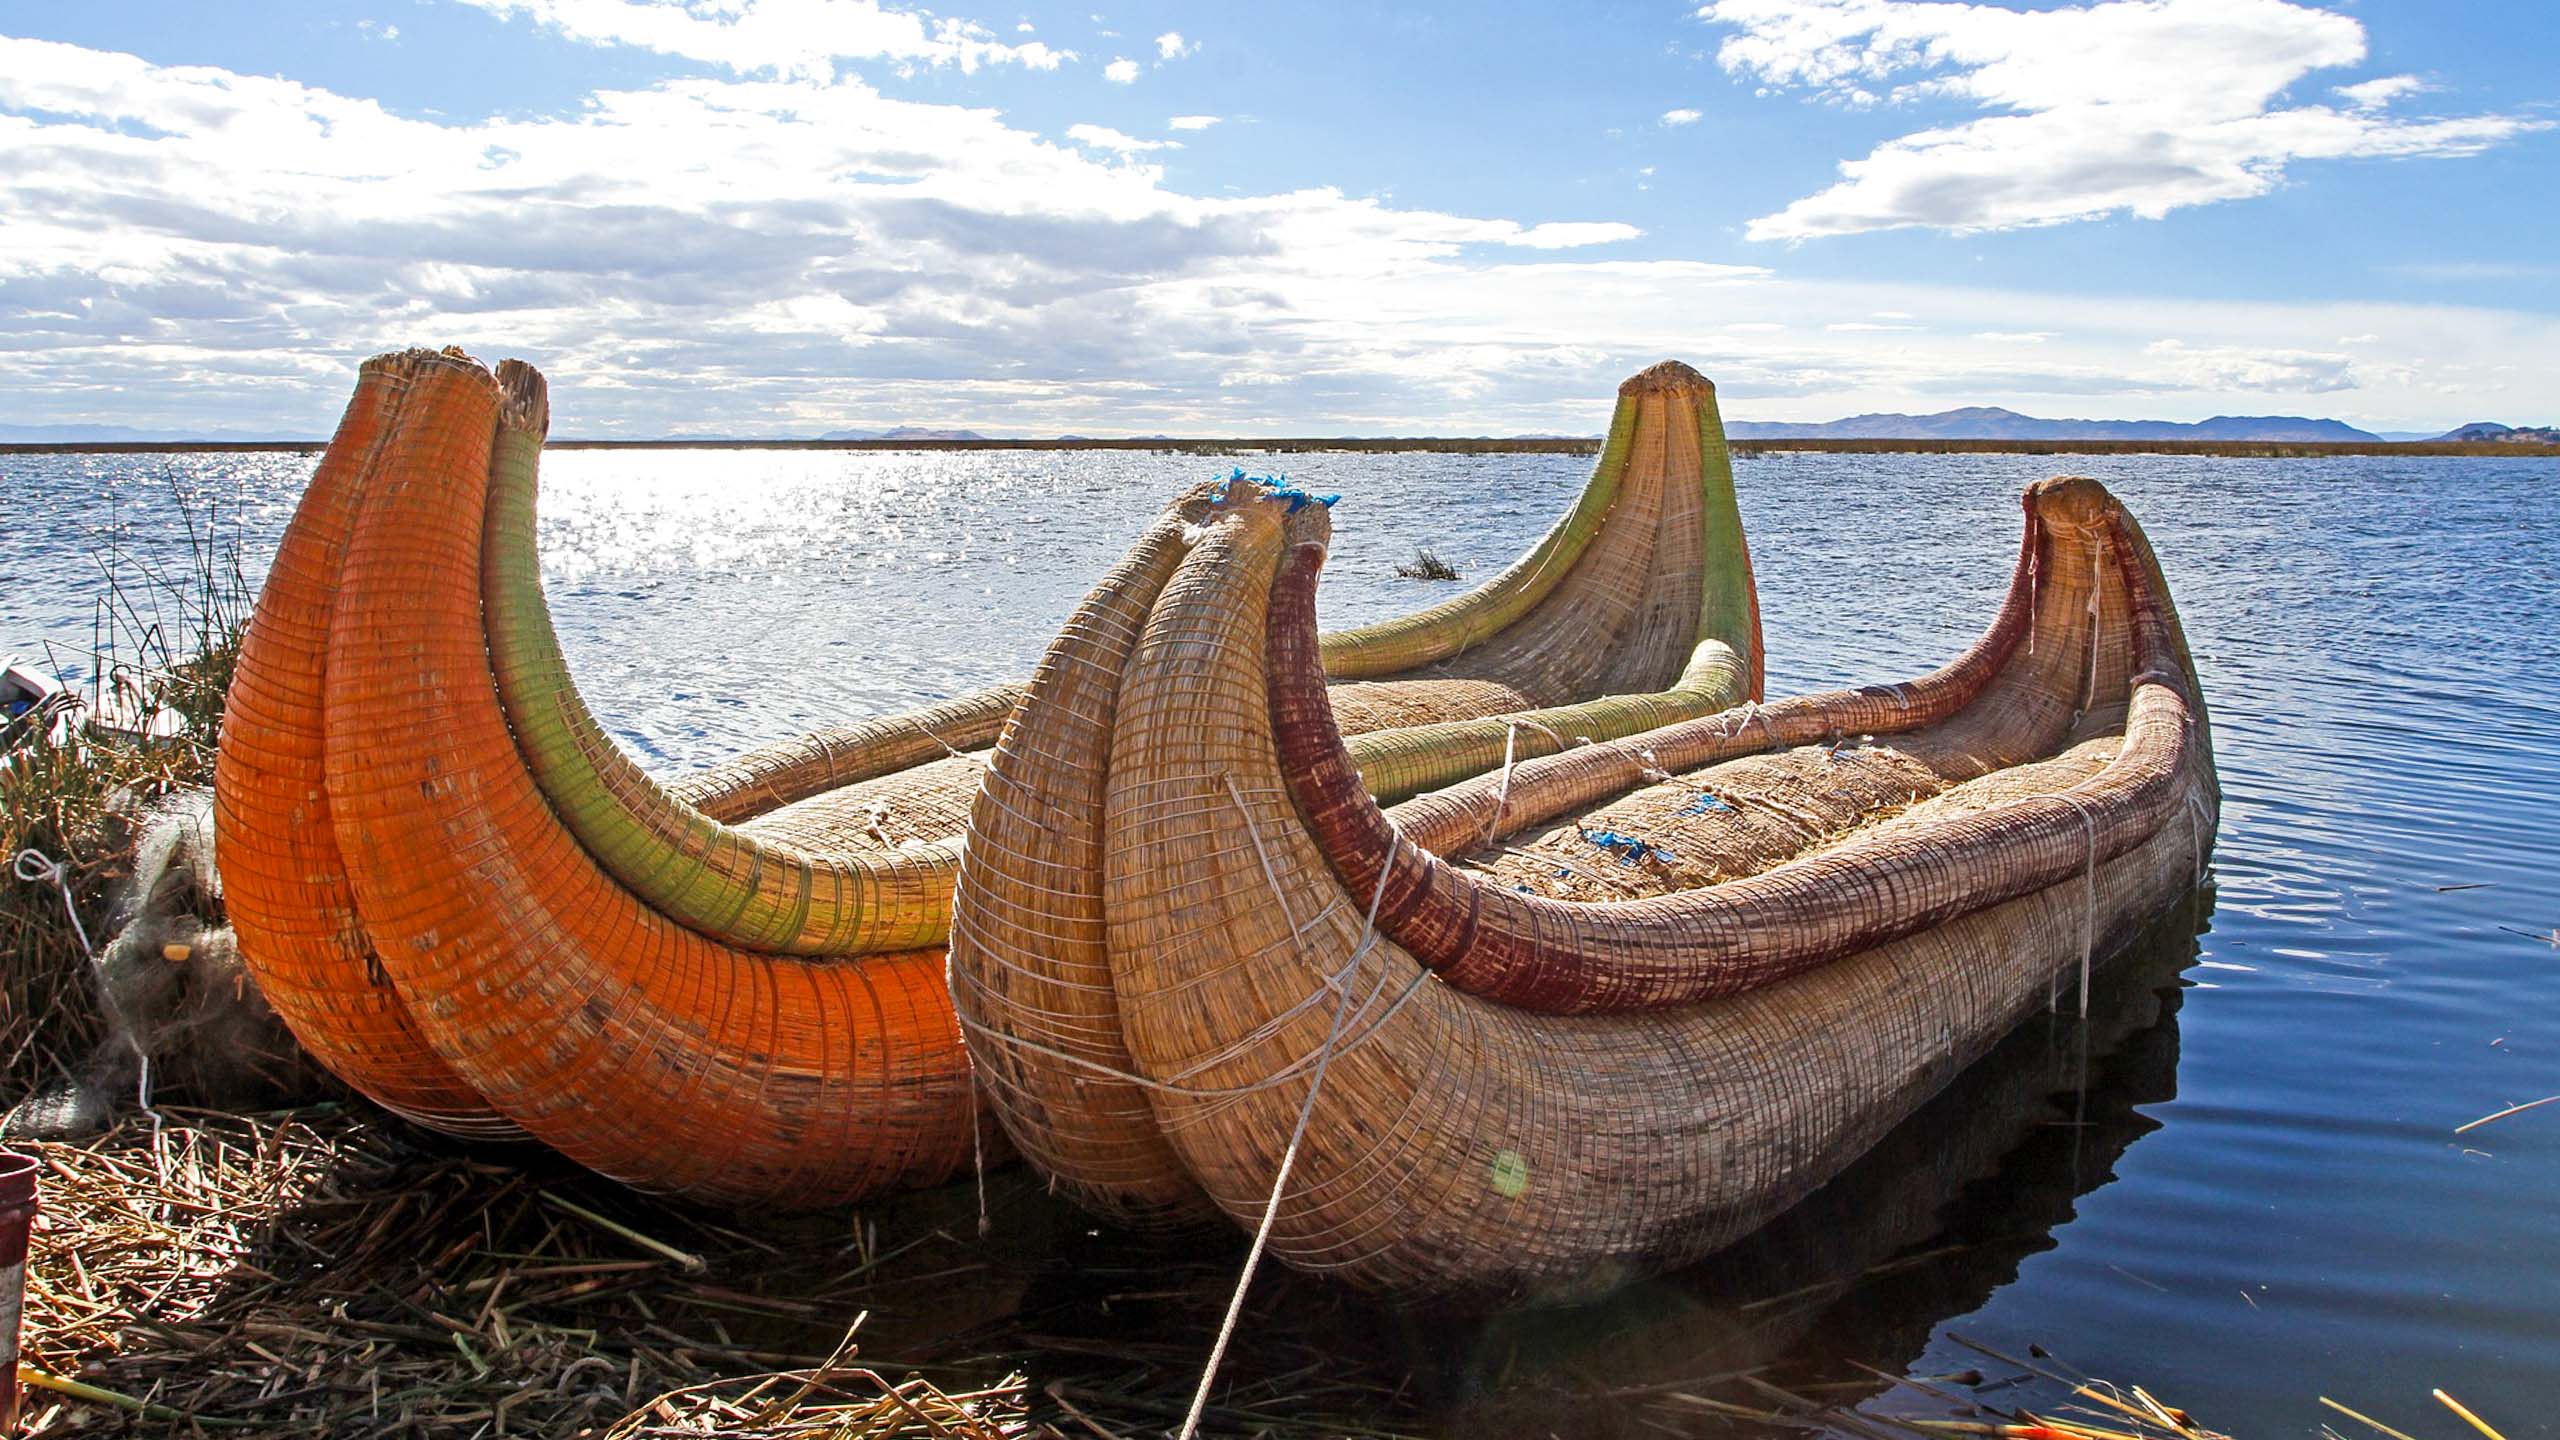 Straw canoes waiting on Peru shore